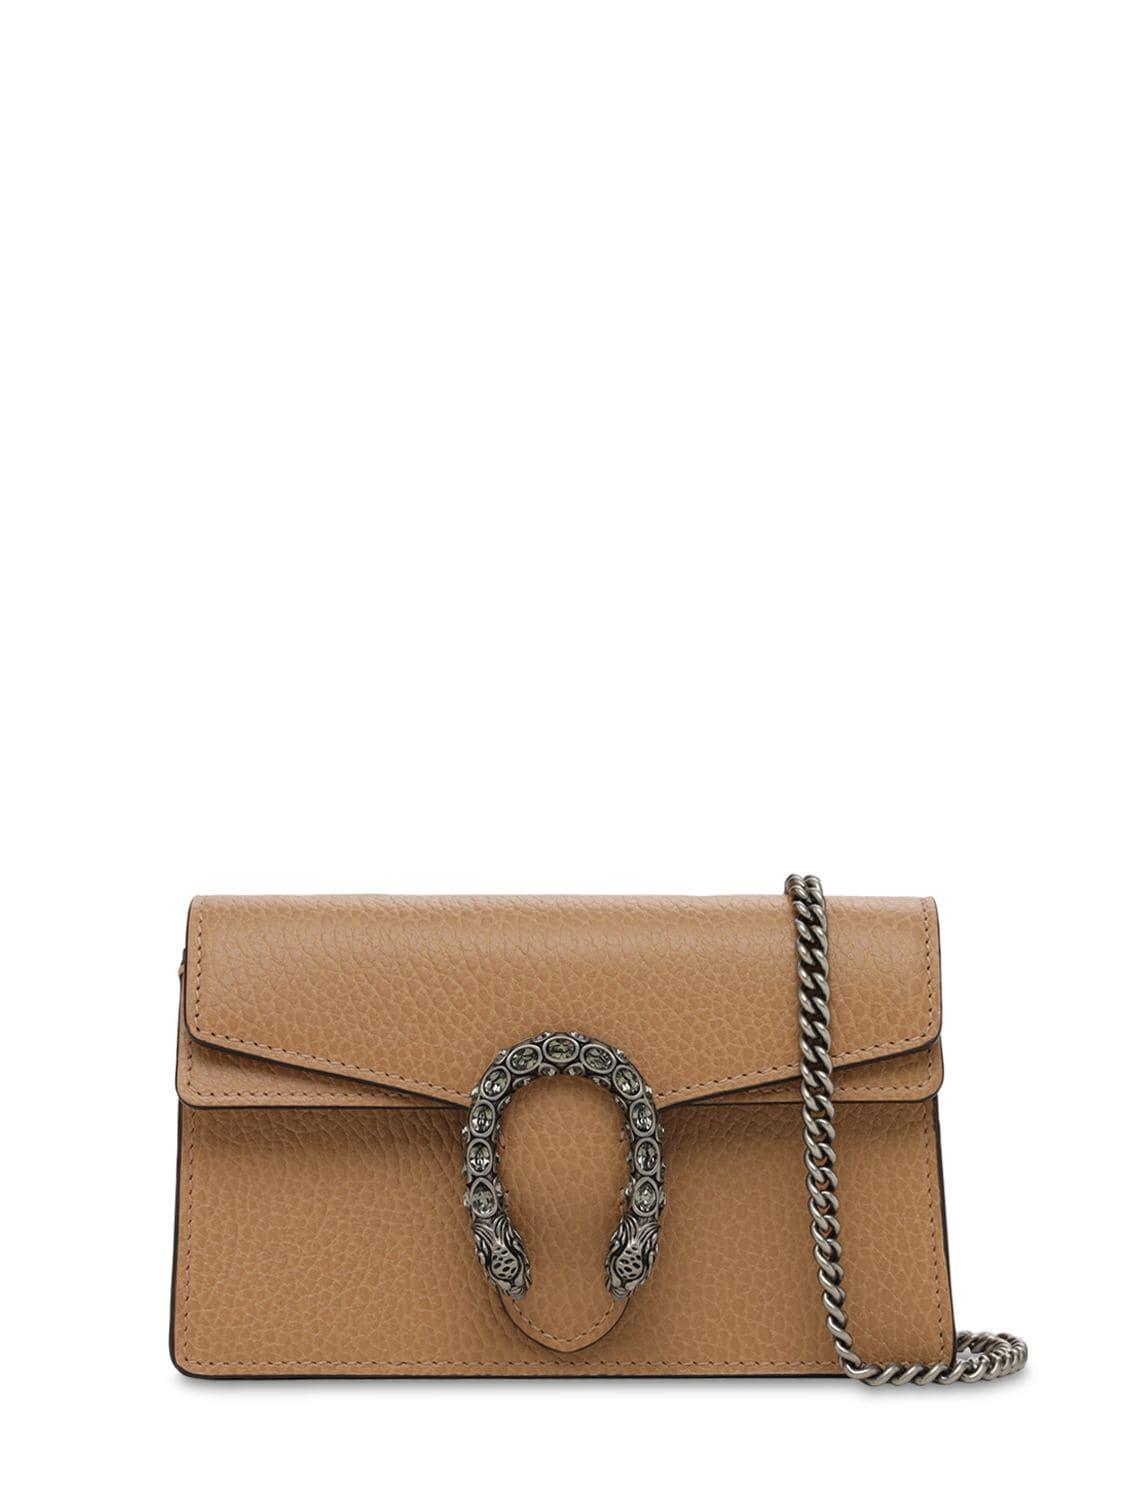 Dionysus leather mini bag